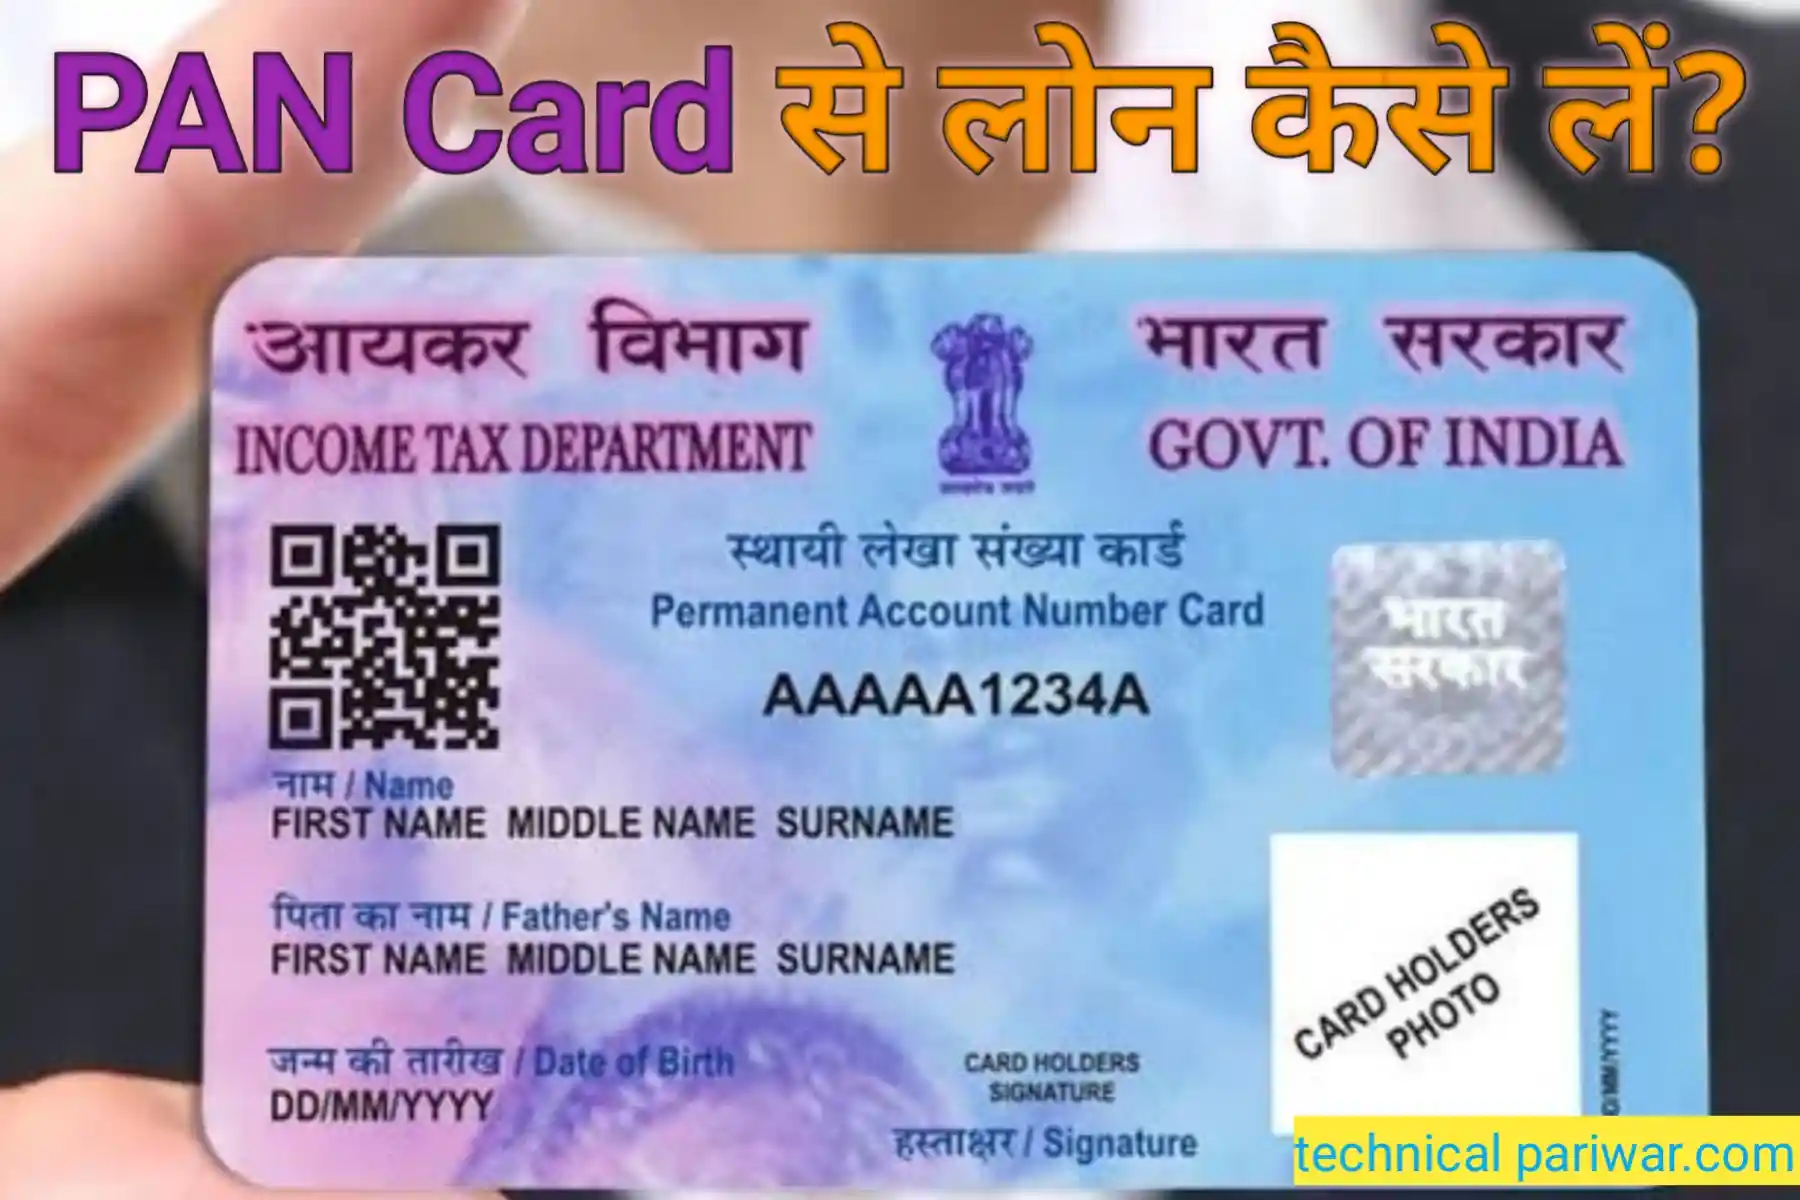 PAN Card se Loan kaise le in hindi